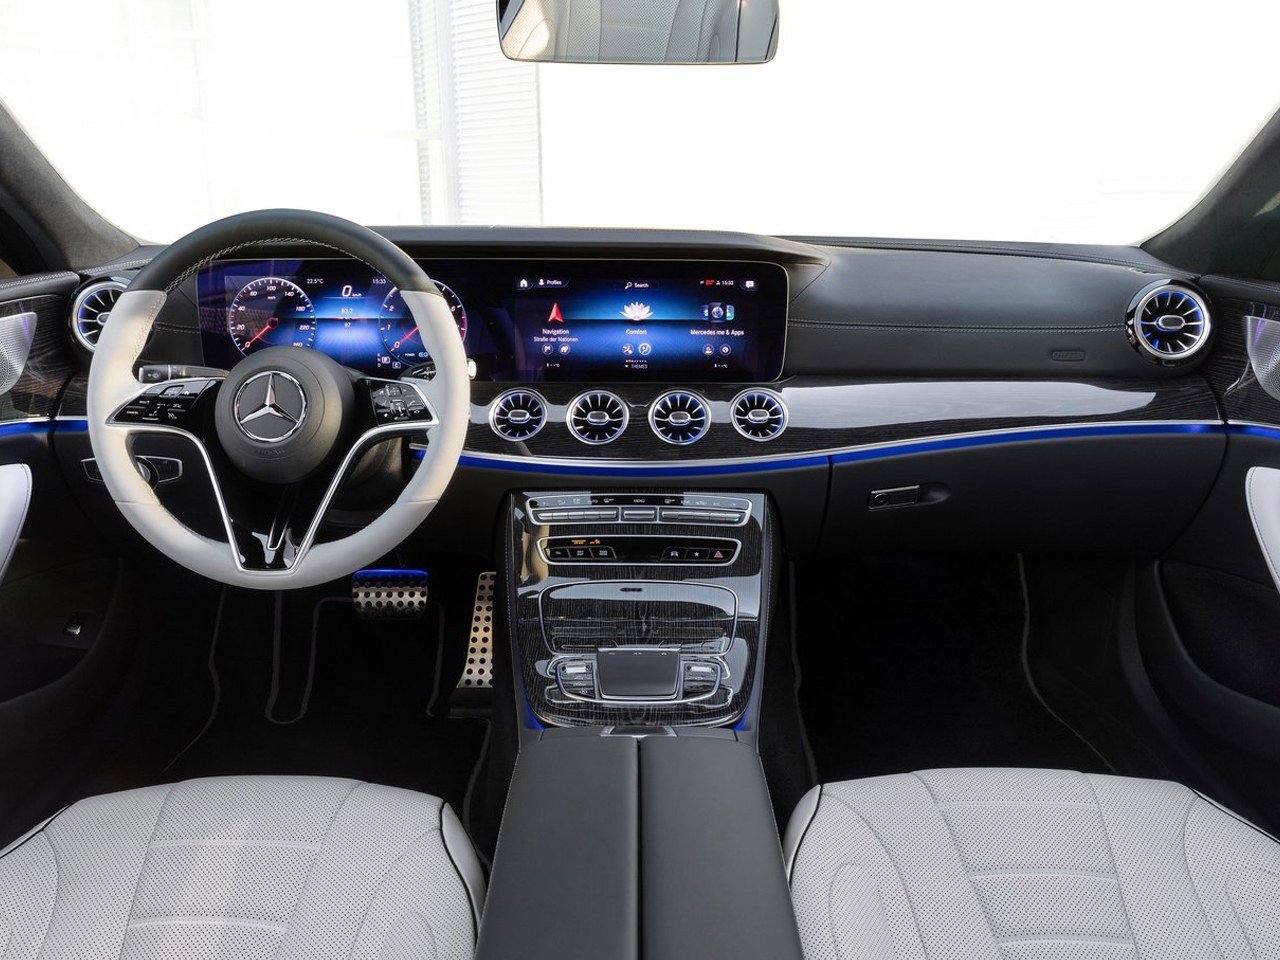 Mercedes-Benz CLS Coupe Interior